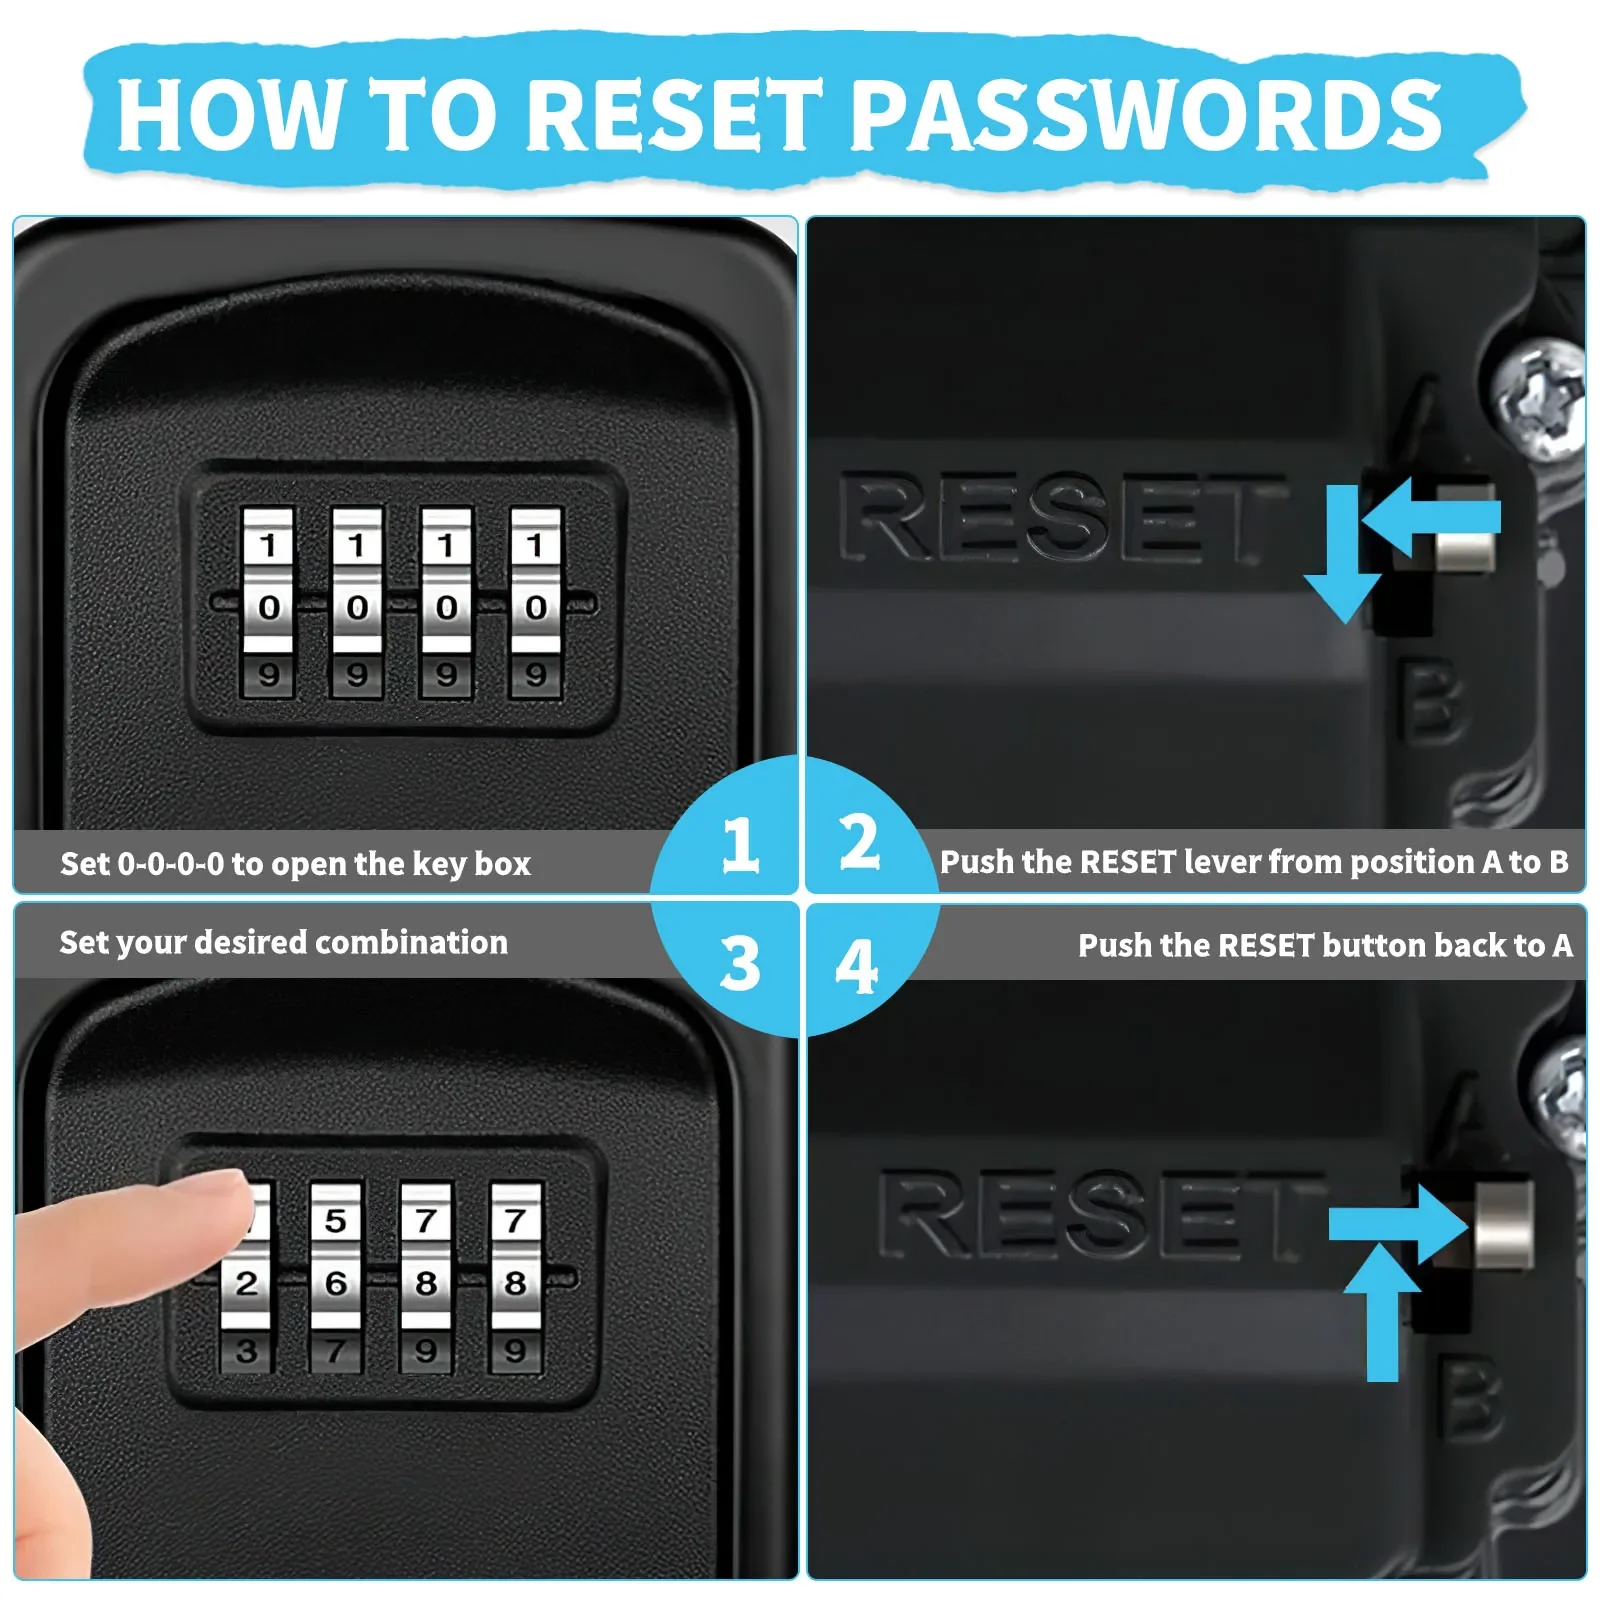 Black Metal Key Lock Box Outdoor Wall Mounted Key Holder Organizer 4 Digit Combination Password Security Lock Storage Secret Box